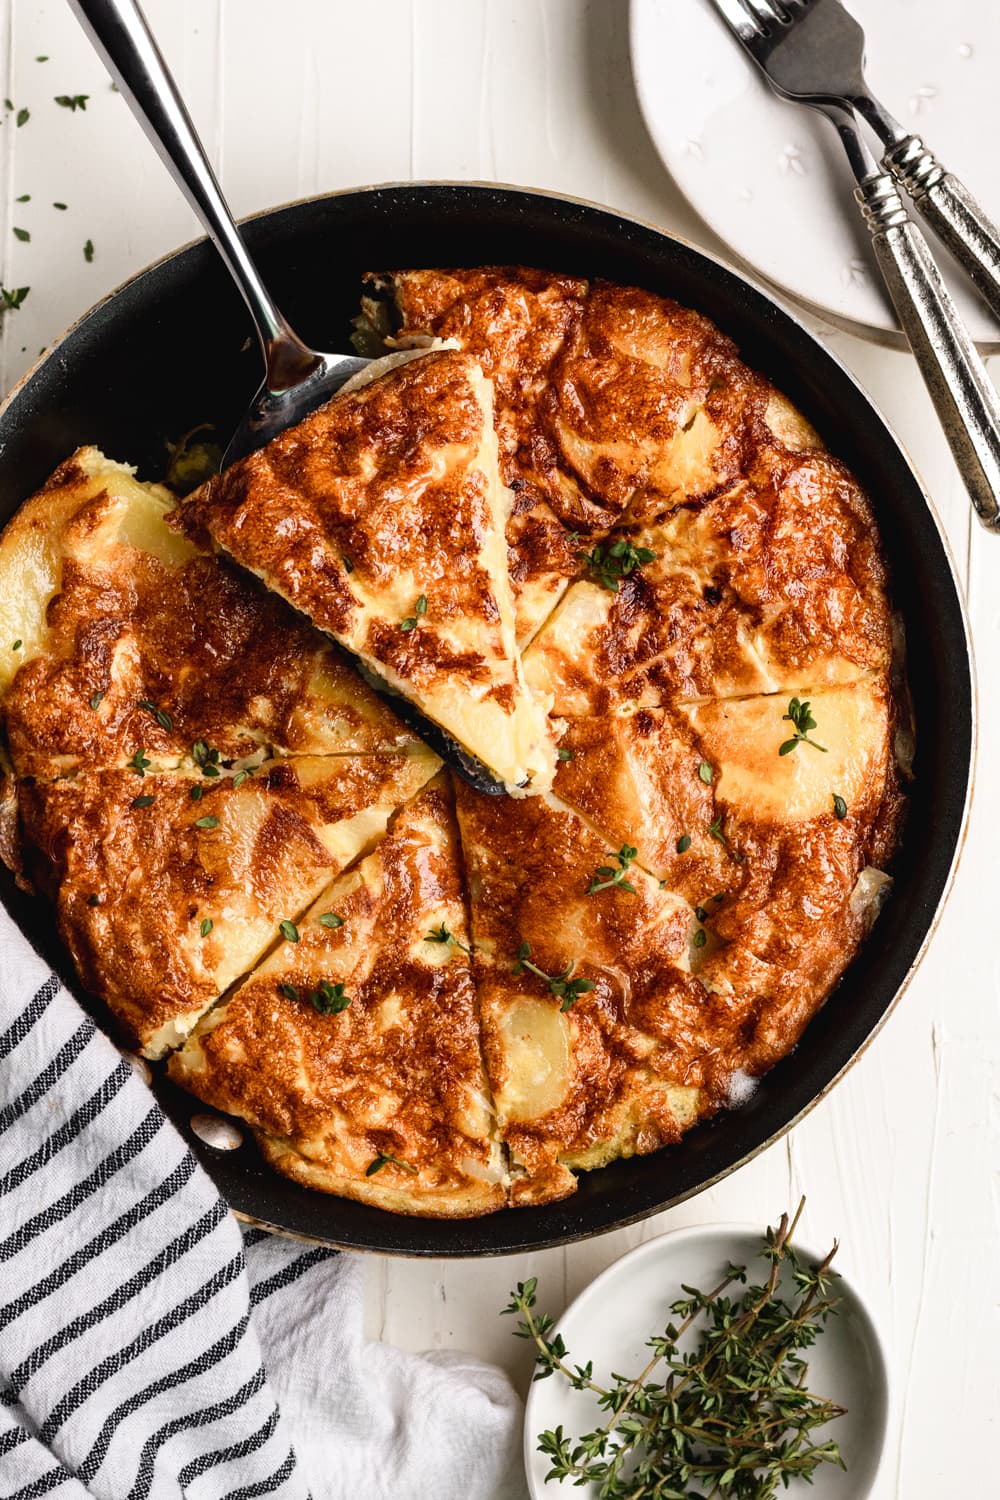 https://asassyspoon.com/wp-content/uploads/spanish-omelette-tortilla-espanola-a-sassy-spoon-recipe-4.jpg